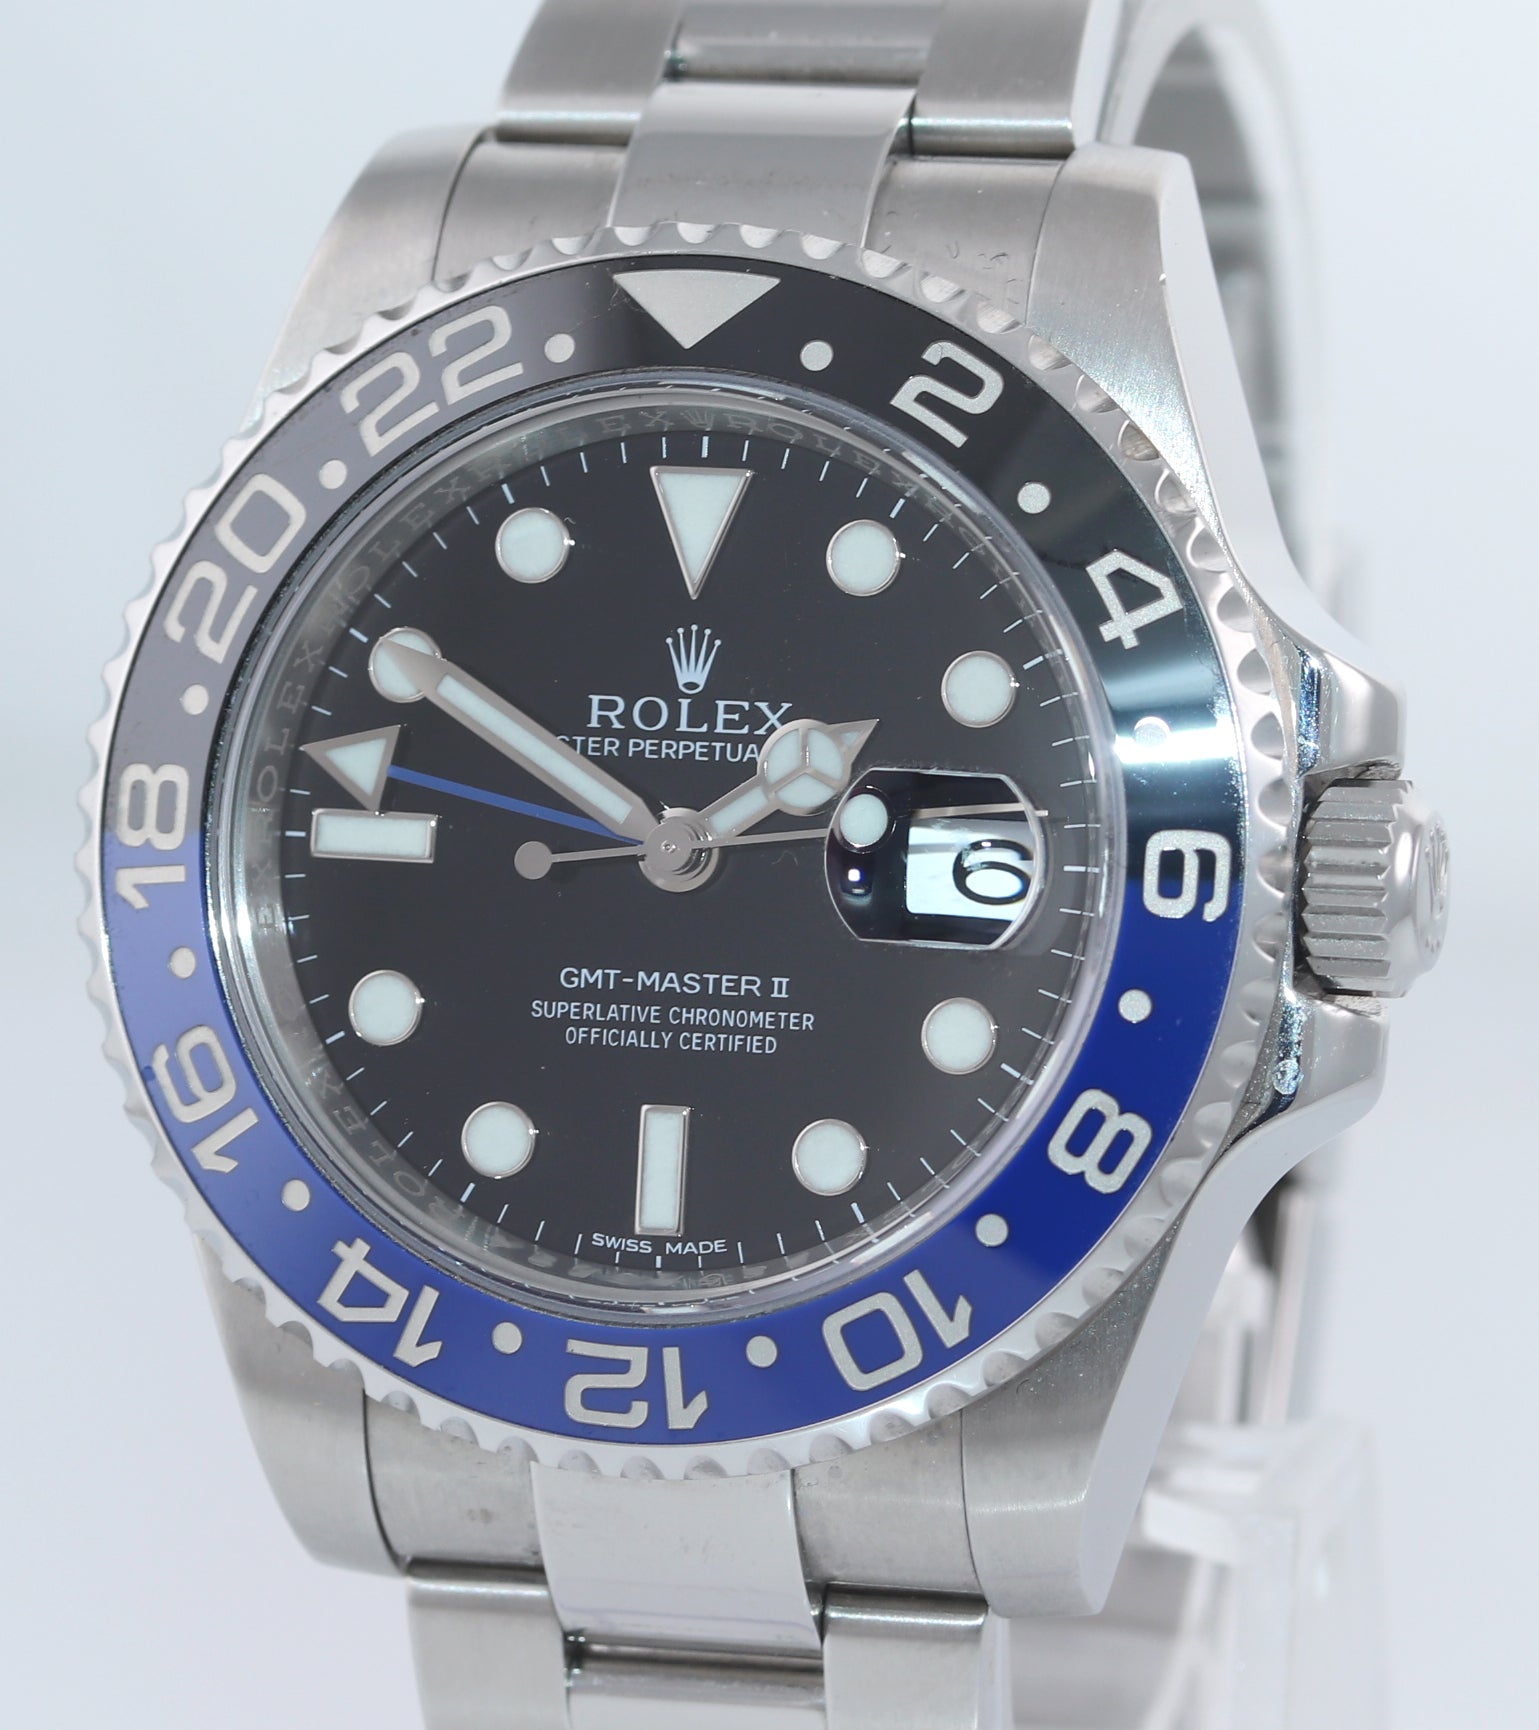 UNPOLISHED PAPERS Rolex GMT Master II 116710 BLNR Steel Ceramic Batman Watch